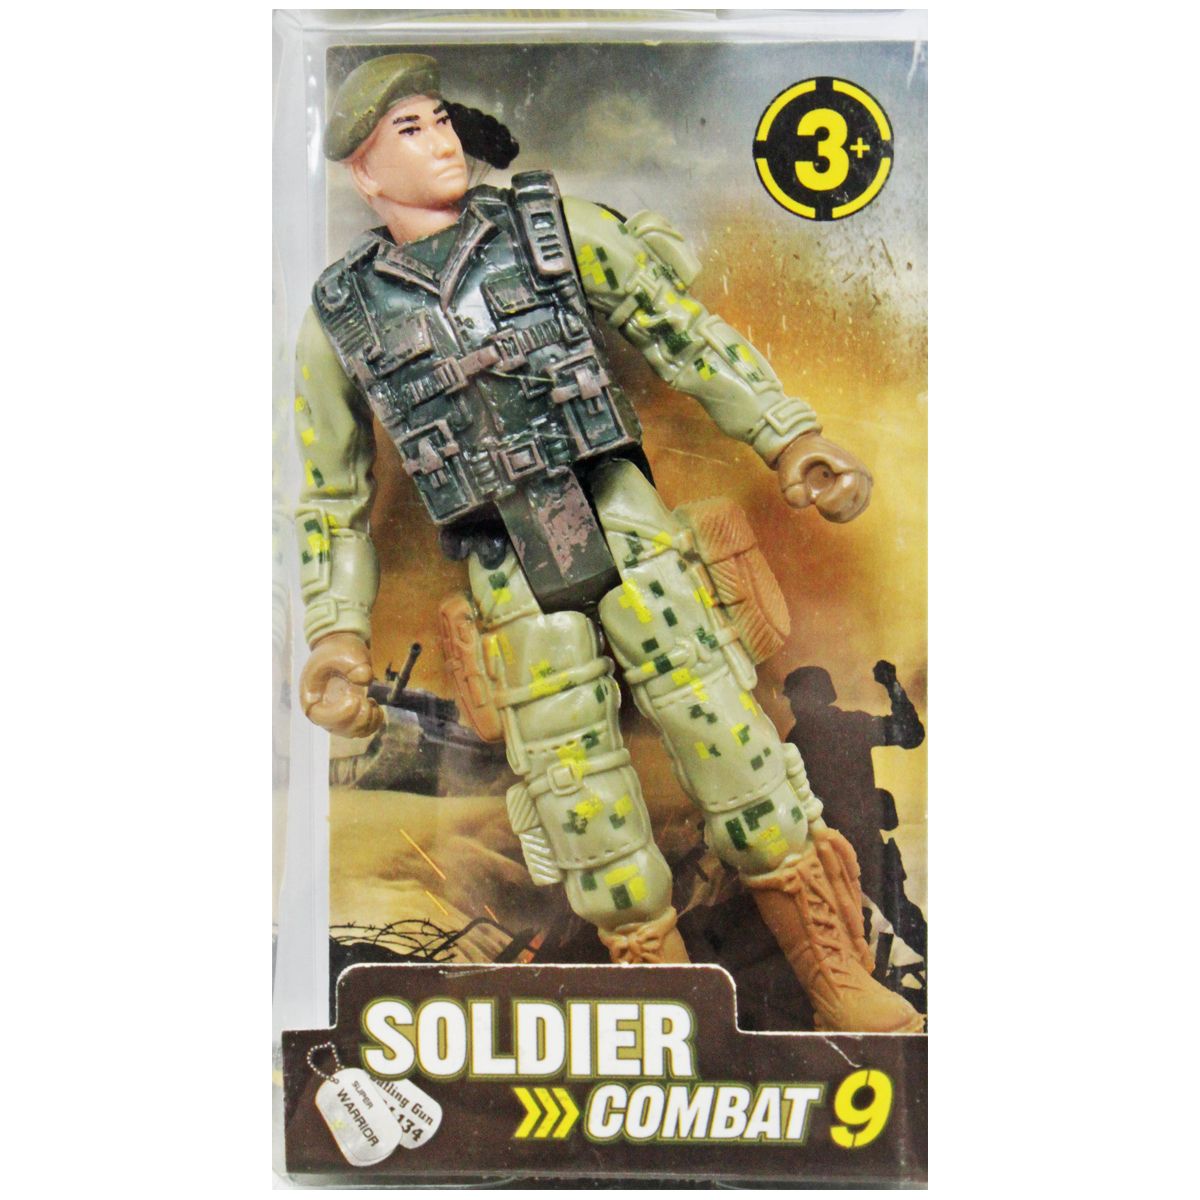 Фигурка солдата "Soldier combat" (вид 3)